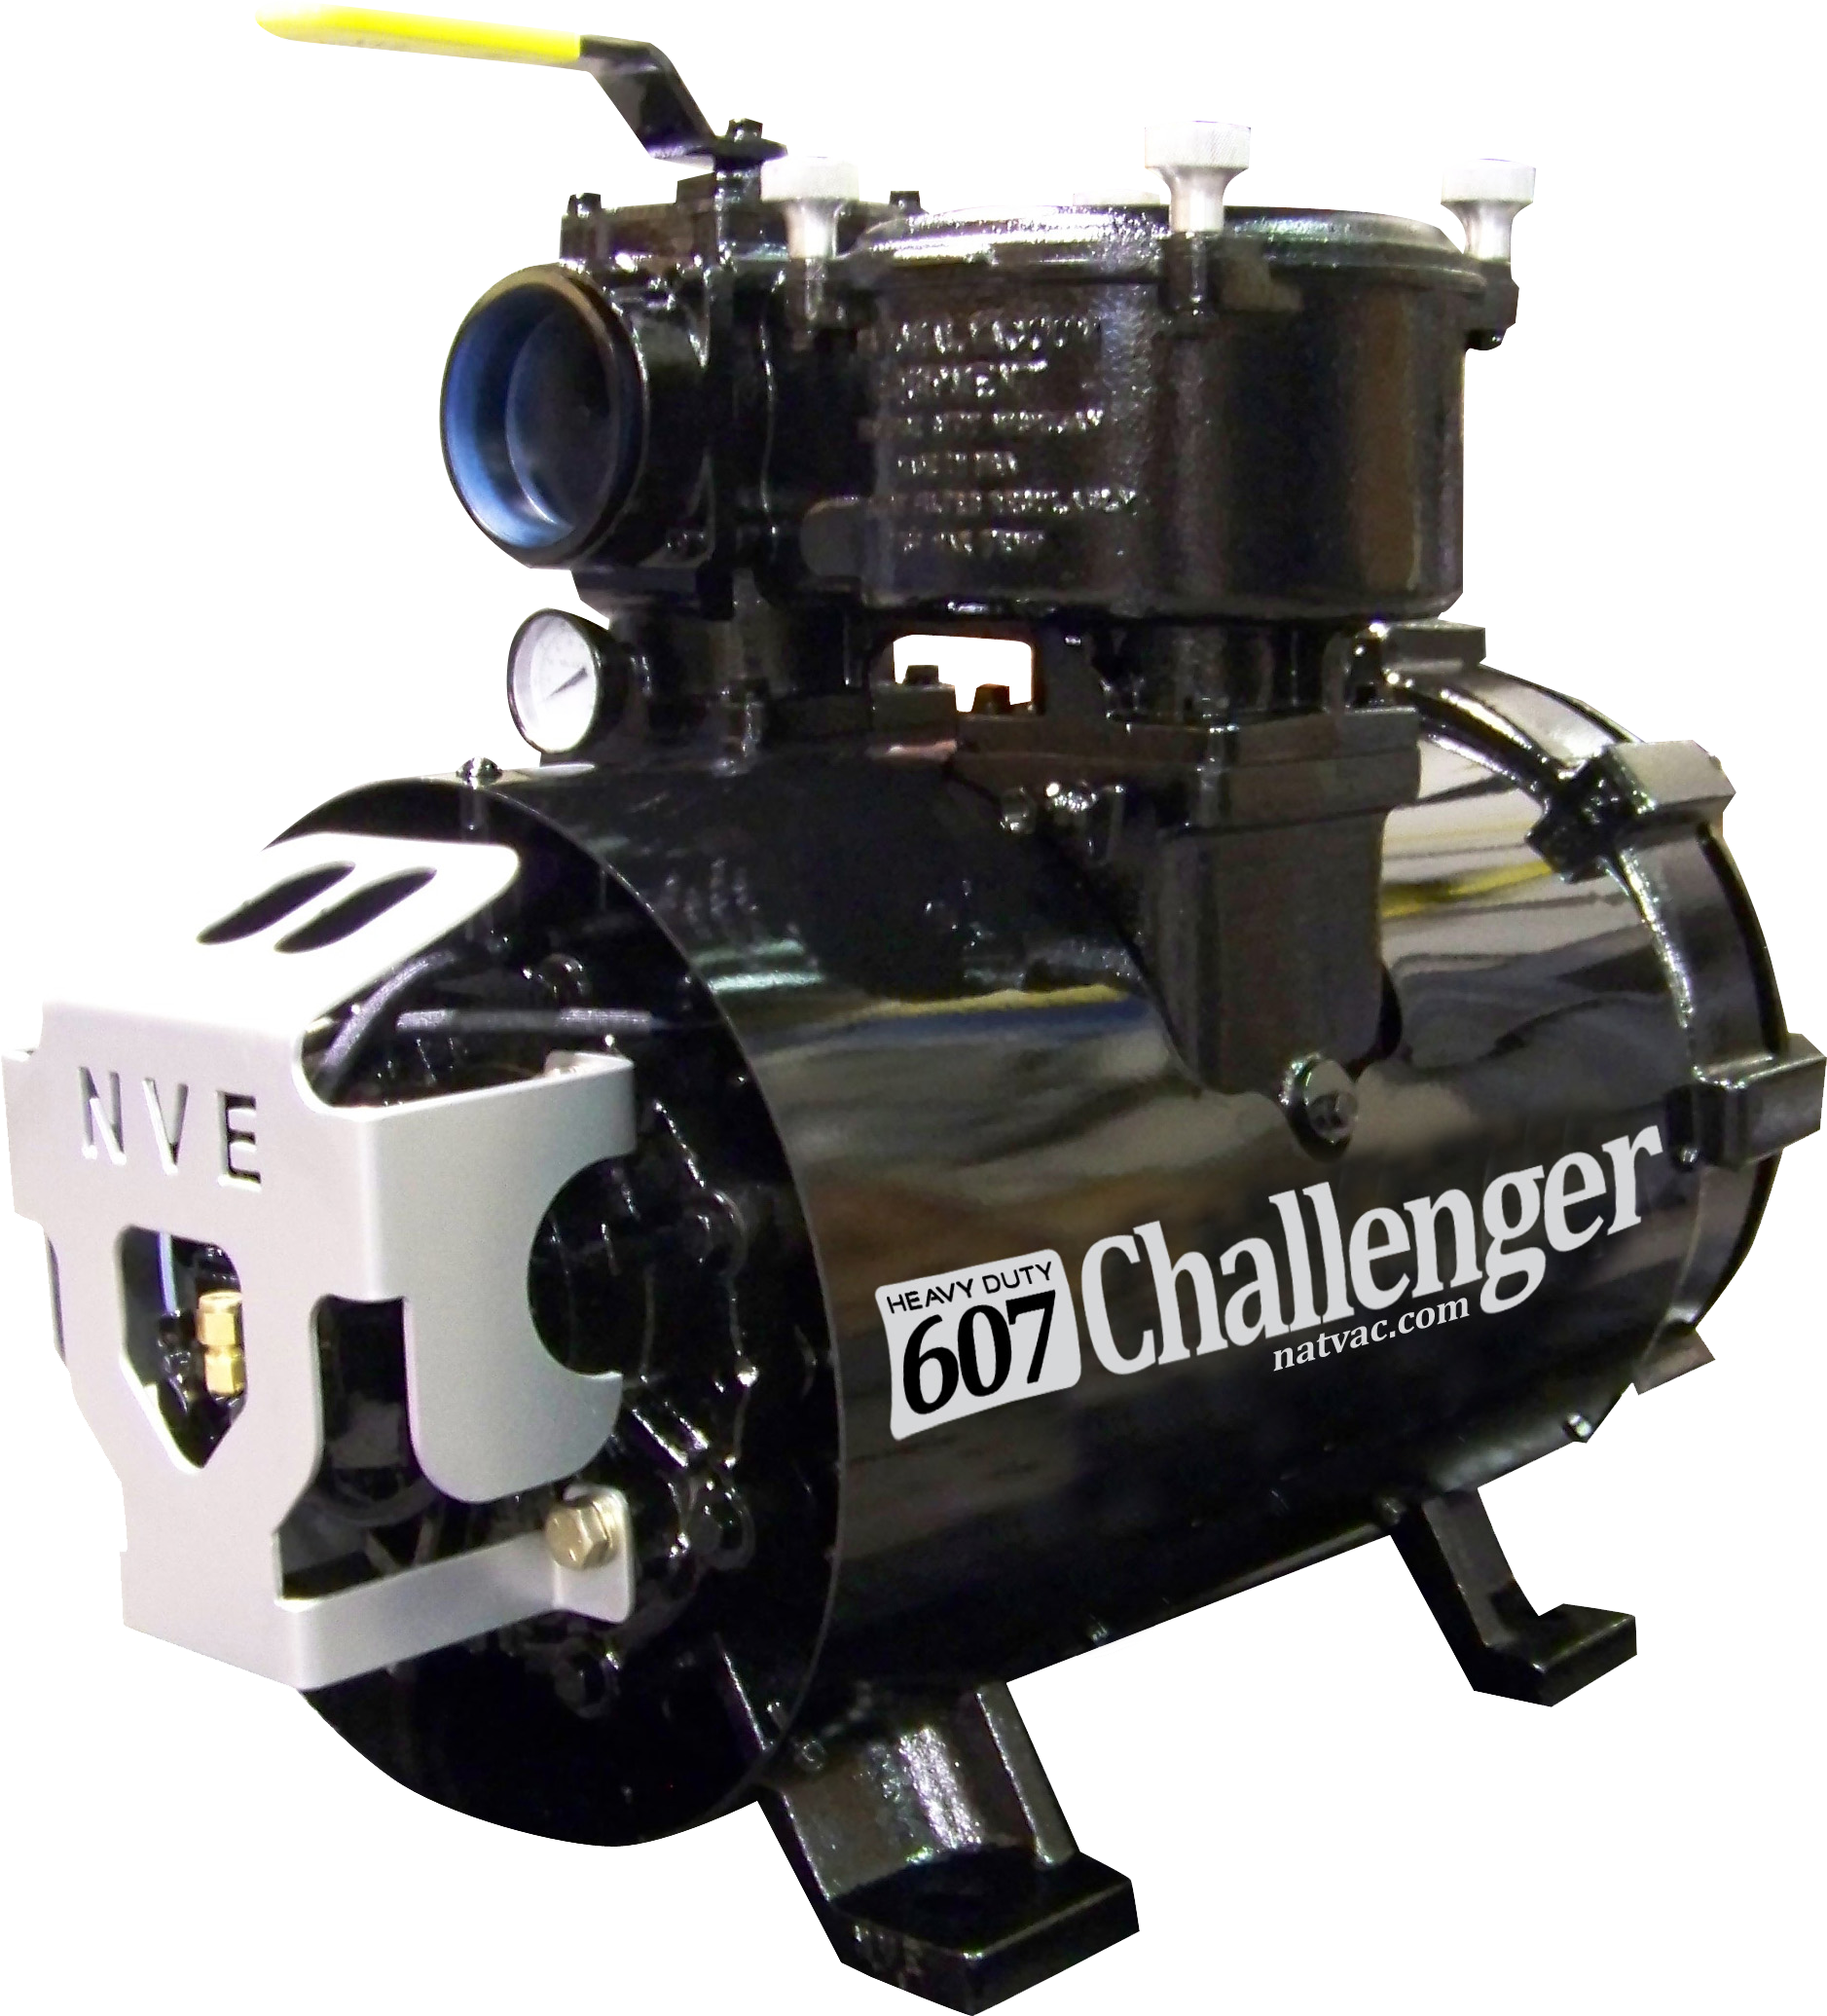 NVE Challenger Vacuum Pumps